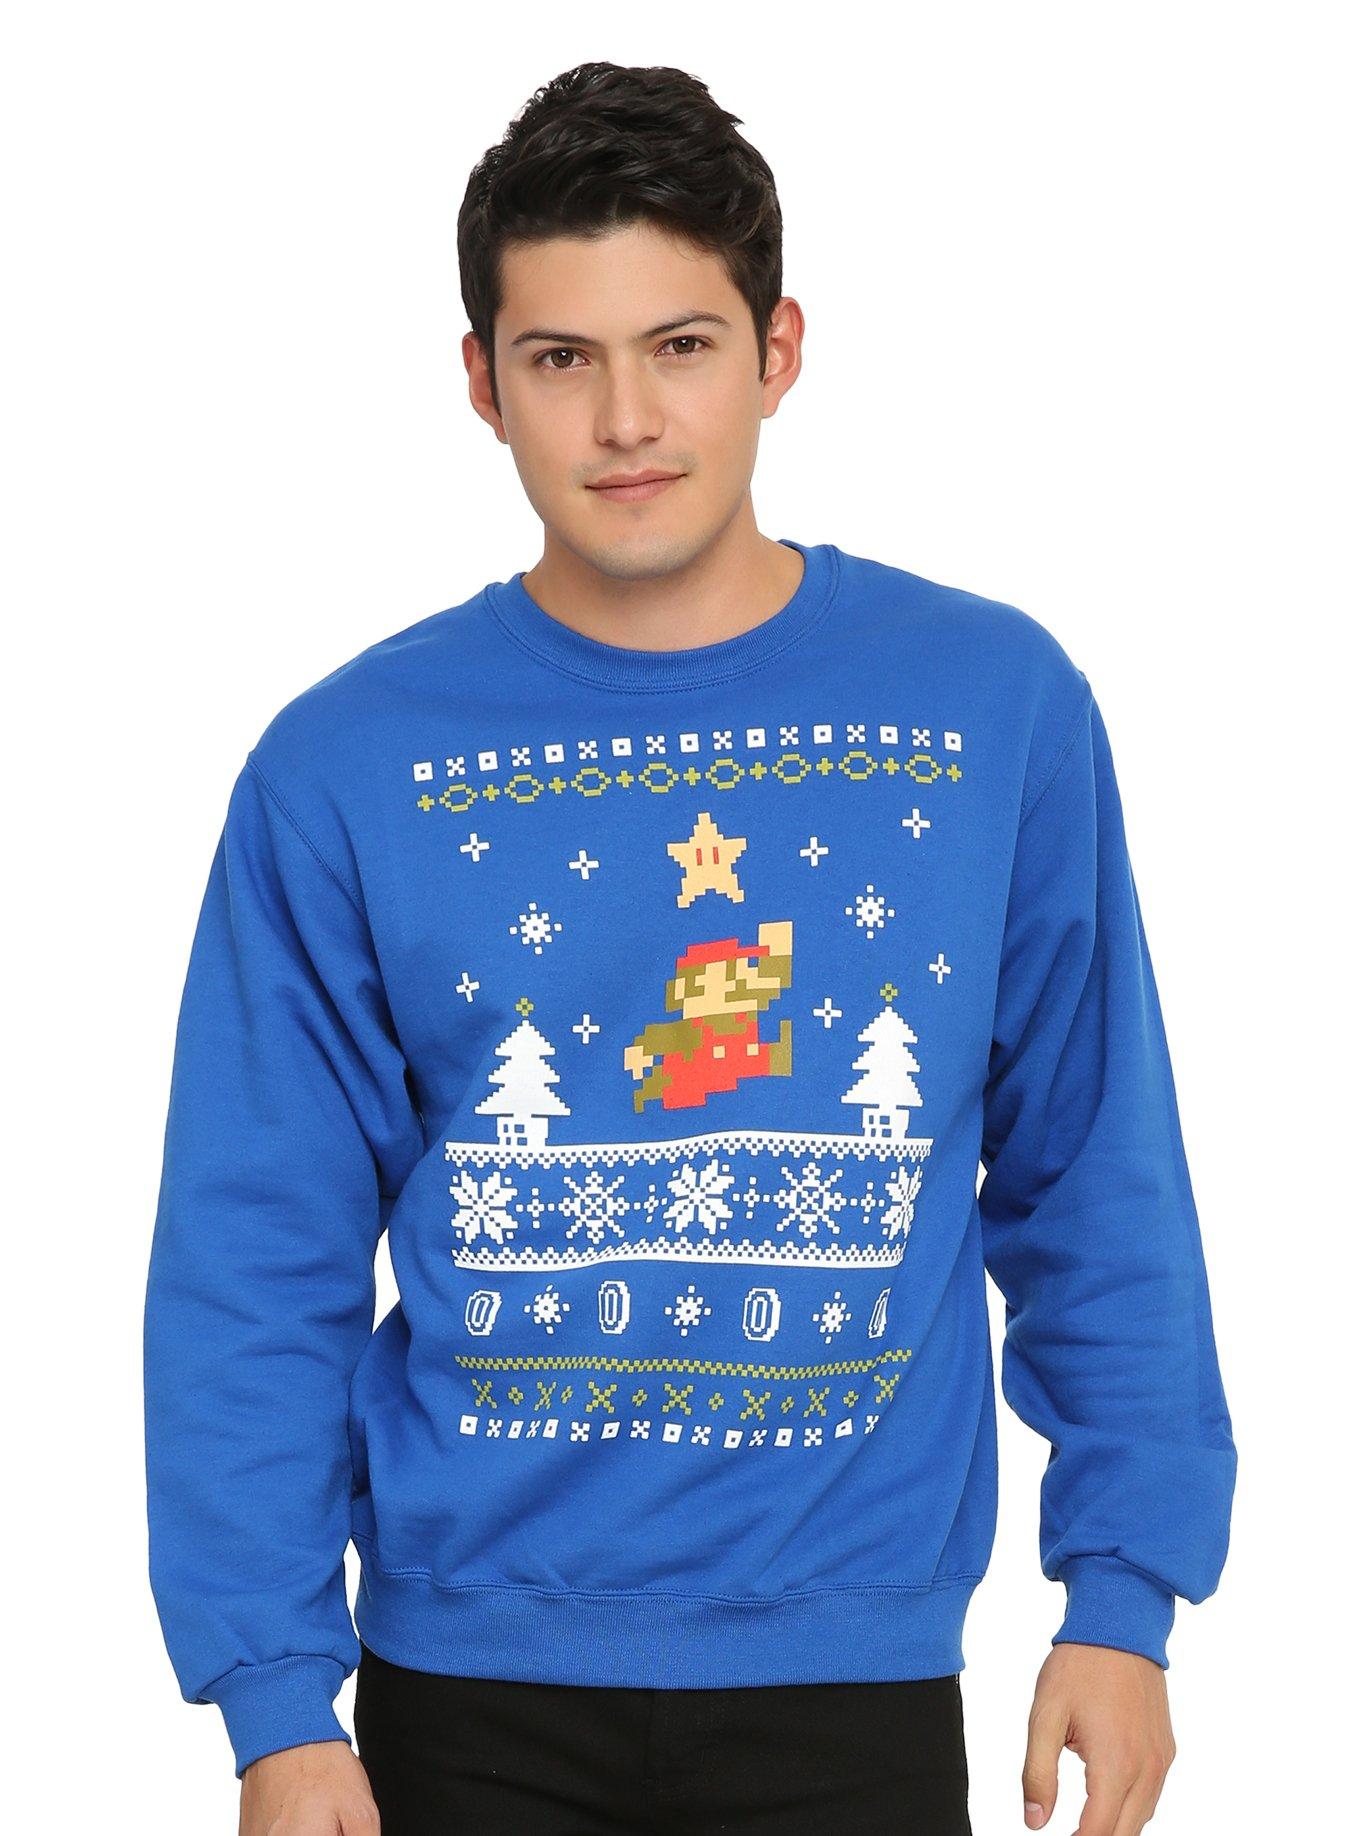 Super Mario Bros. Mario Holiday Sweater Sweatshirt | Hot Topic